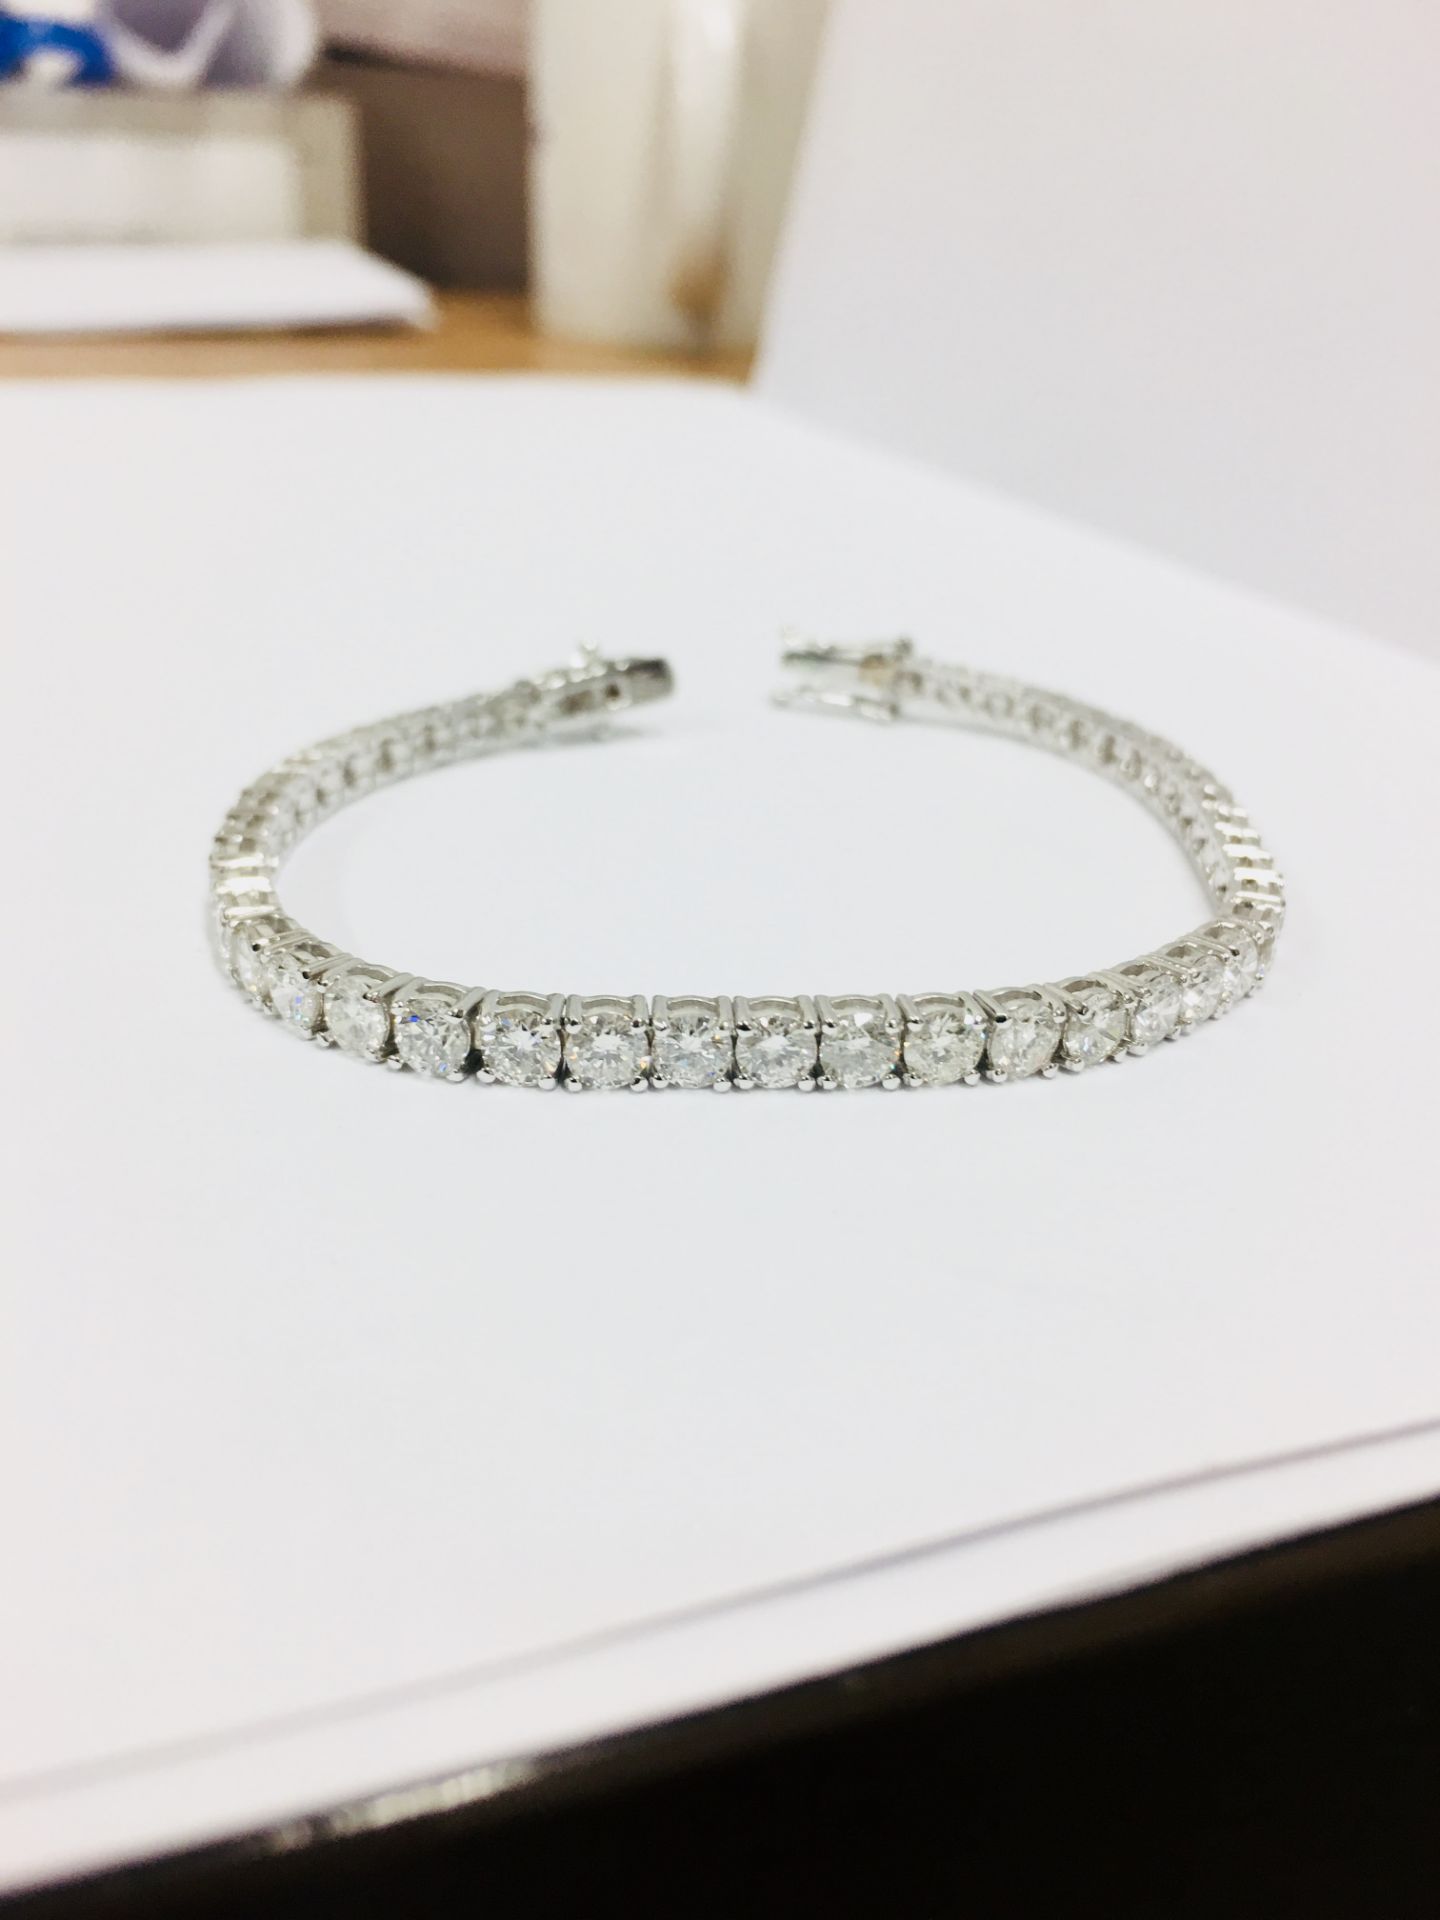 10.00ct Diamond tennis bracelet set with brilliant cut diamonds of I/J colour, si2-3 clarity. All - Image 4 of 6